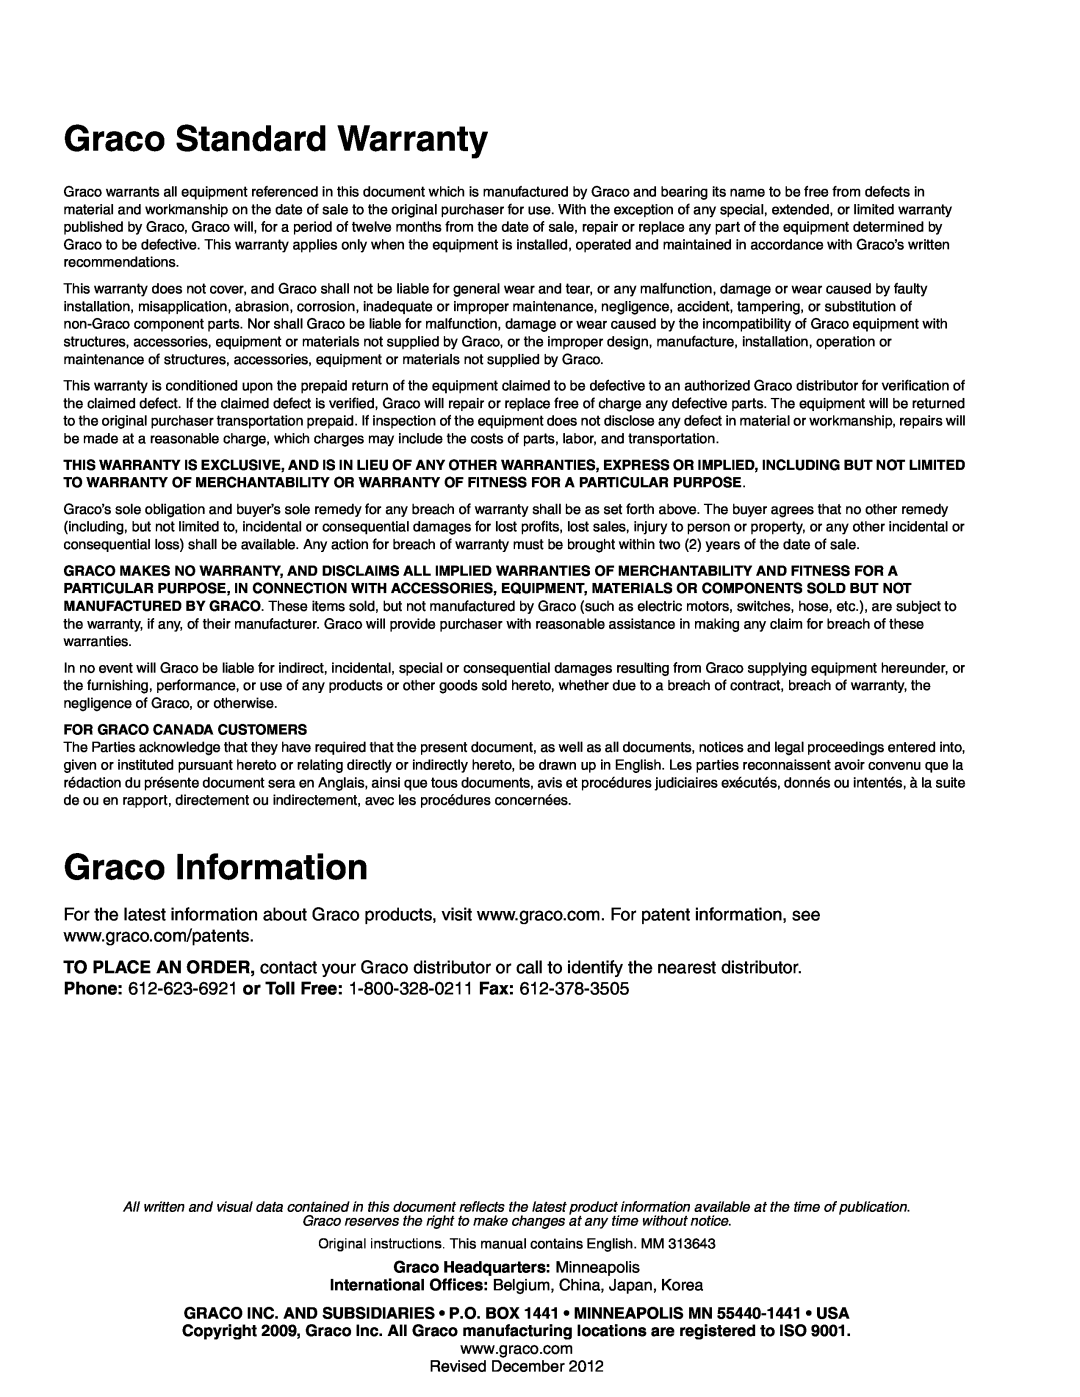 Graco Series B, 24C729, 24C728 B warranty Graco Standard Warranty, Graco Information 